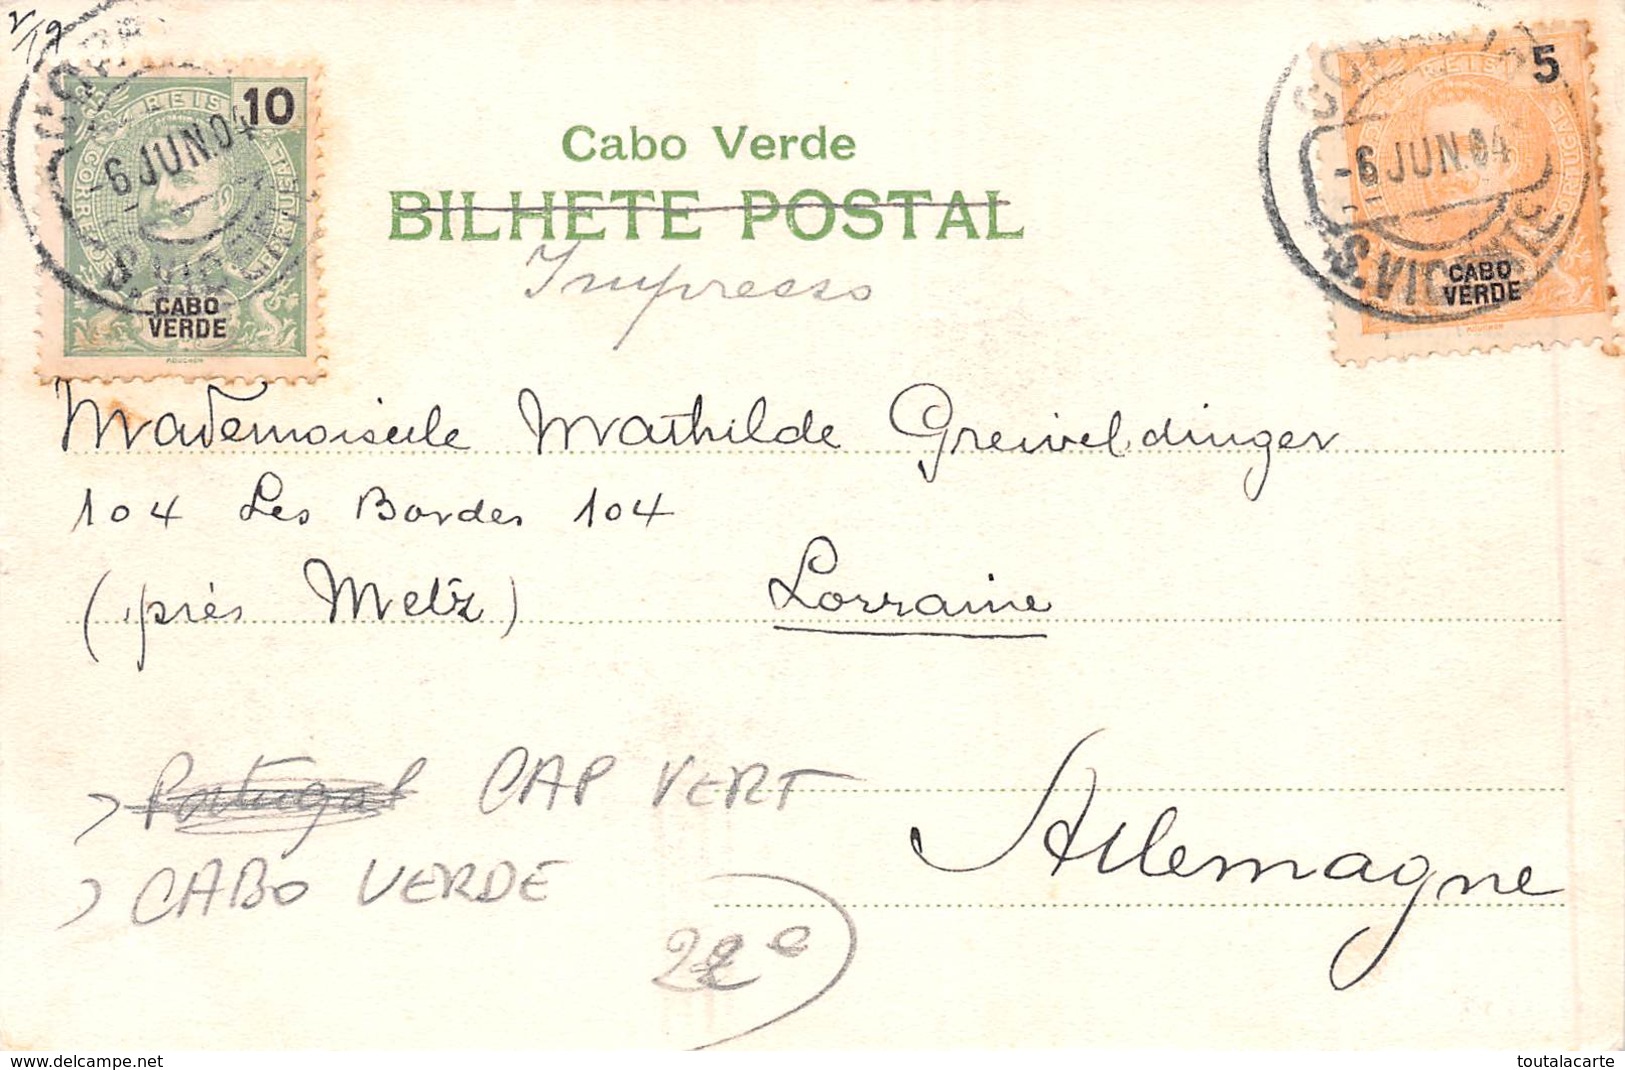 CPA CABO VERDE SAO VICENTE COSTUMES  1904 - Cap Vert